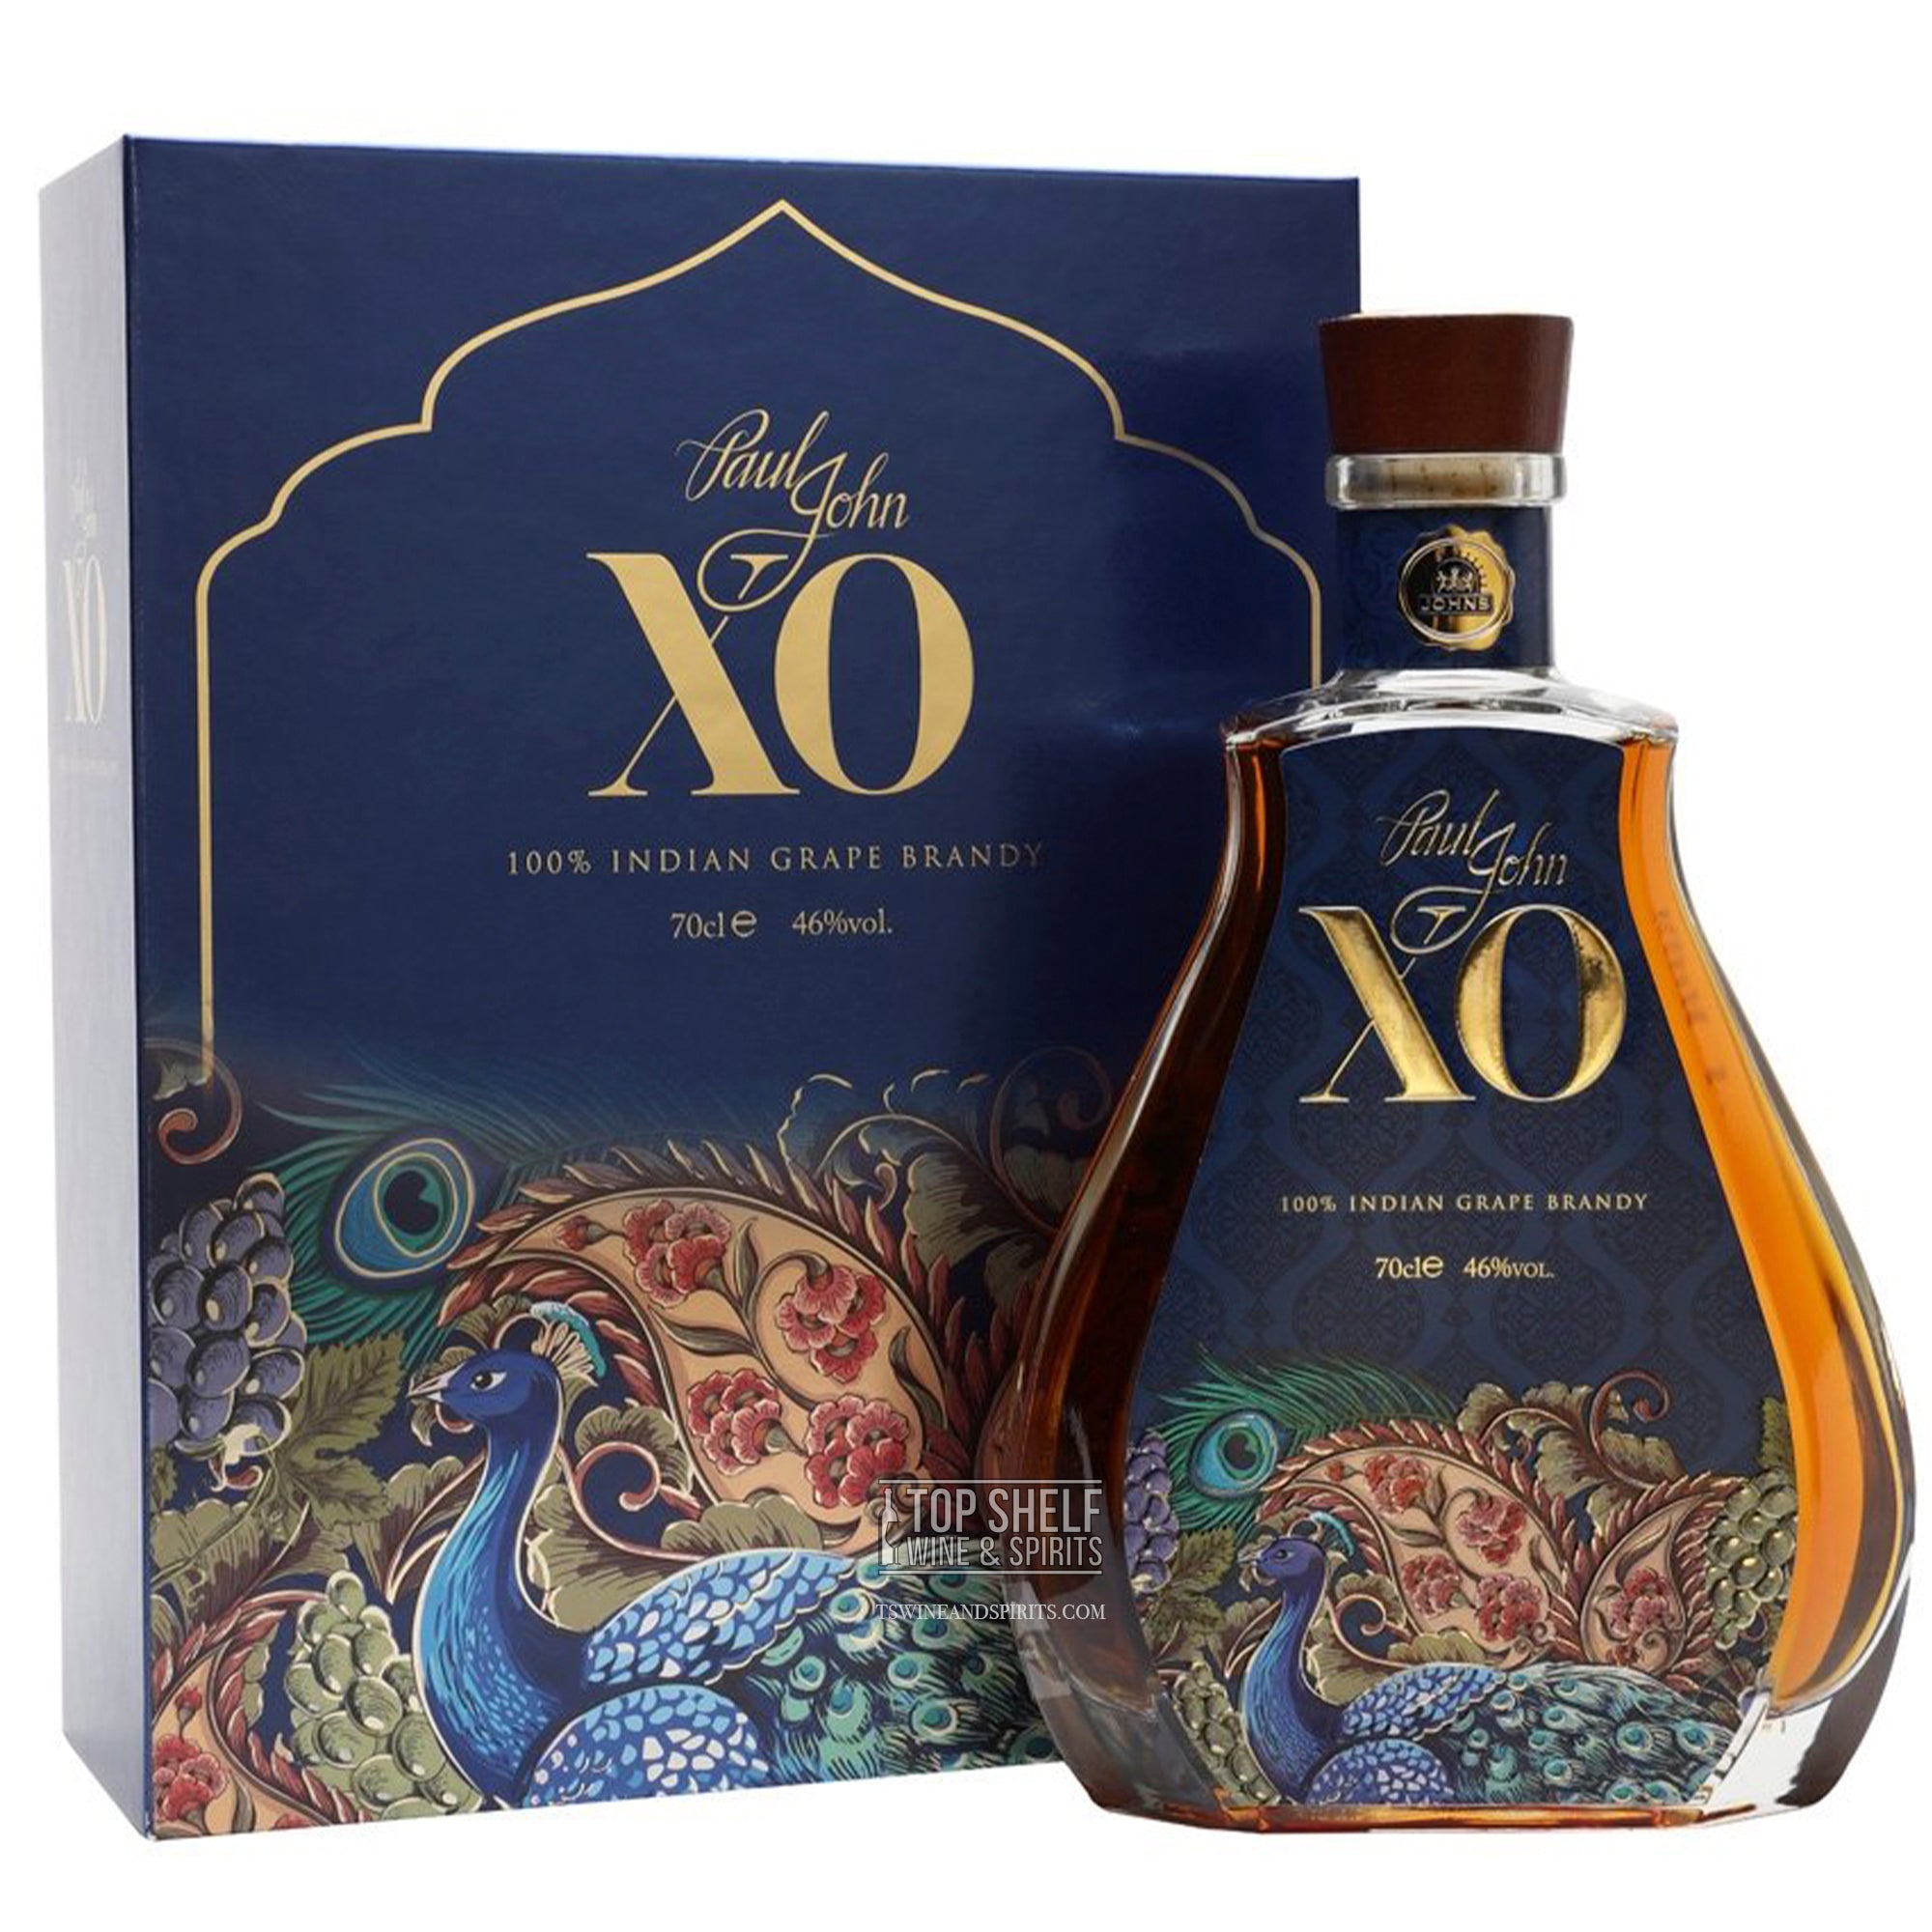 Paul John XO Limited Edition Indian Grape Brandy